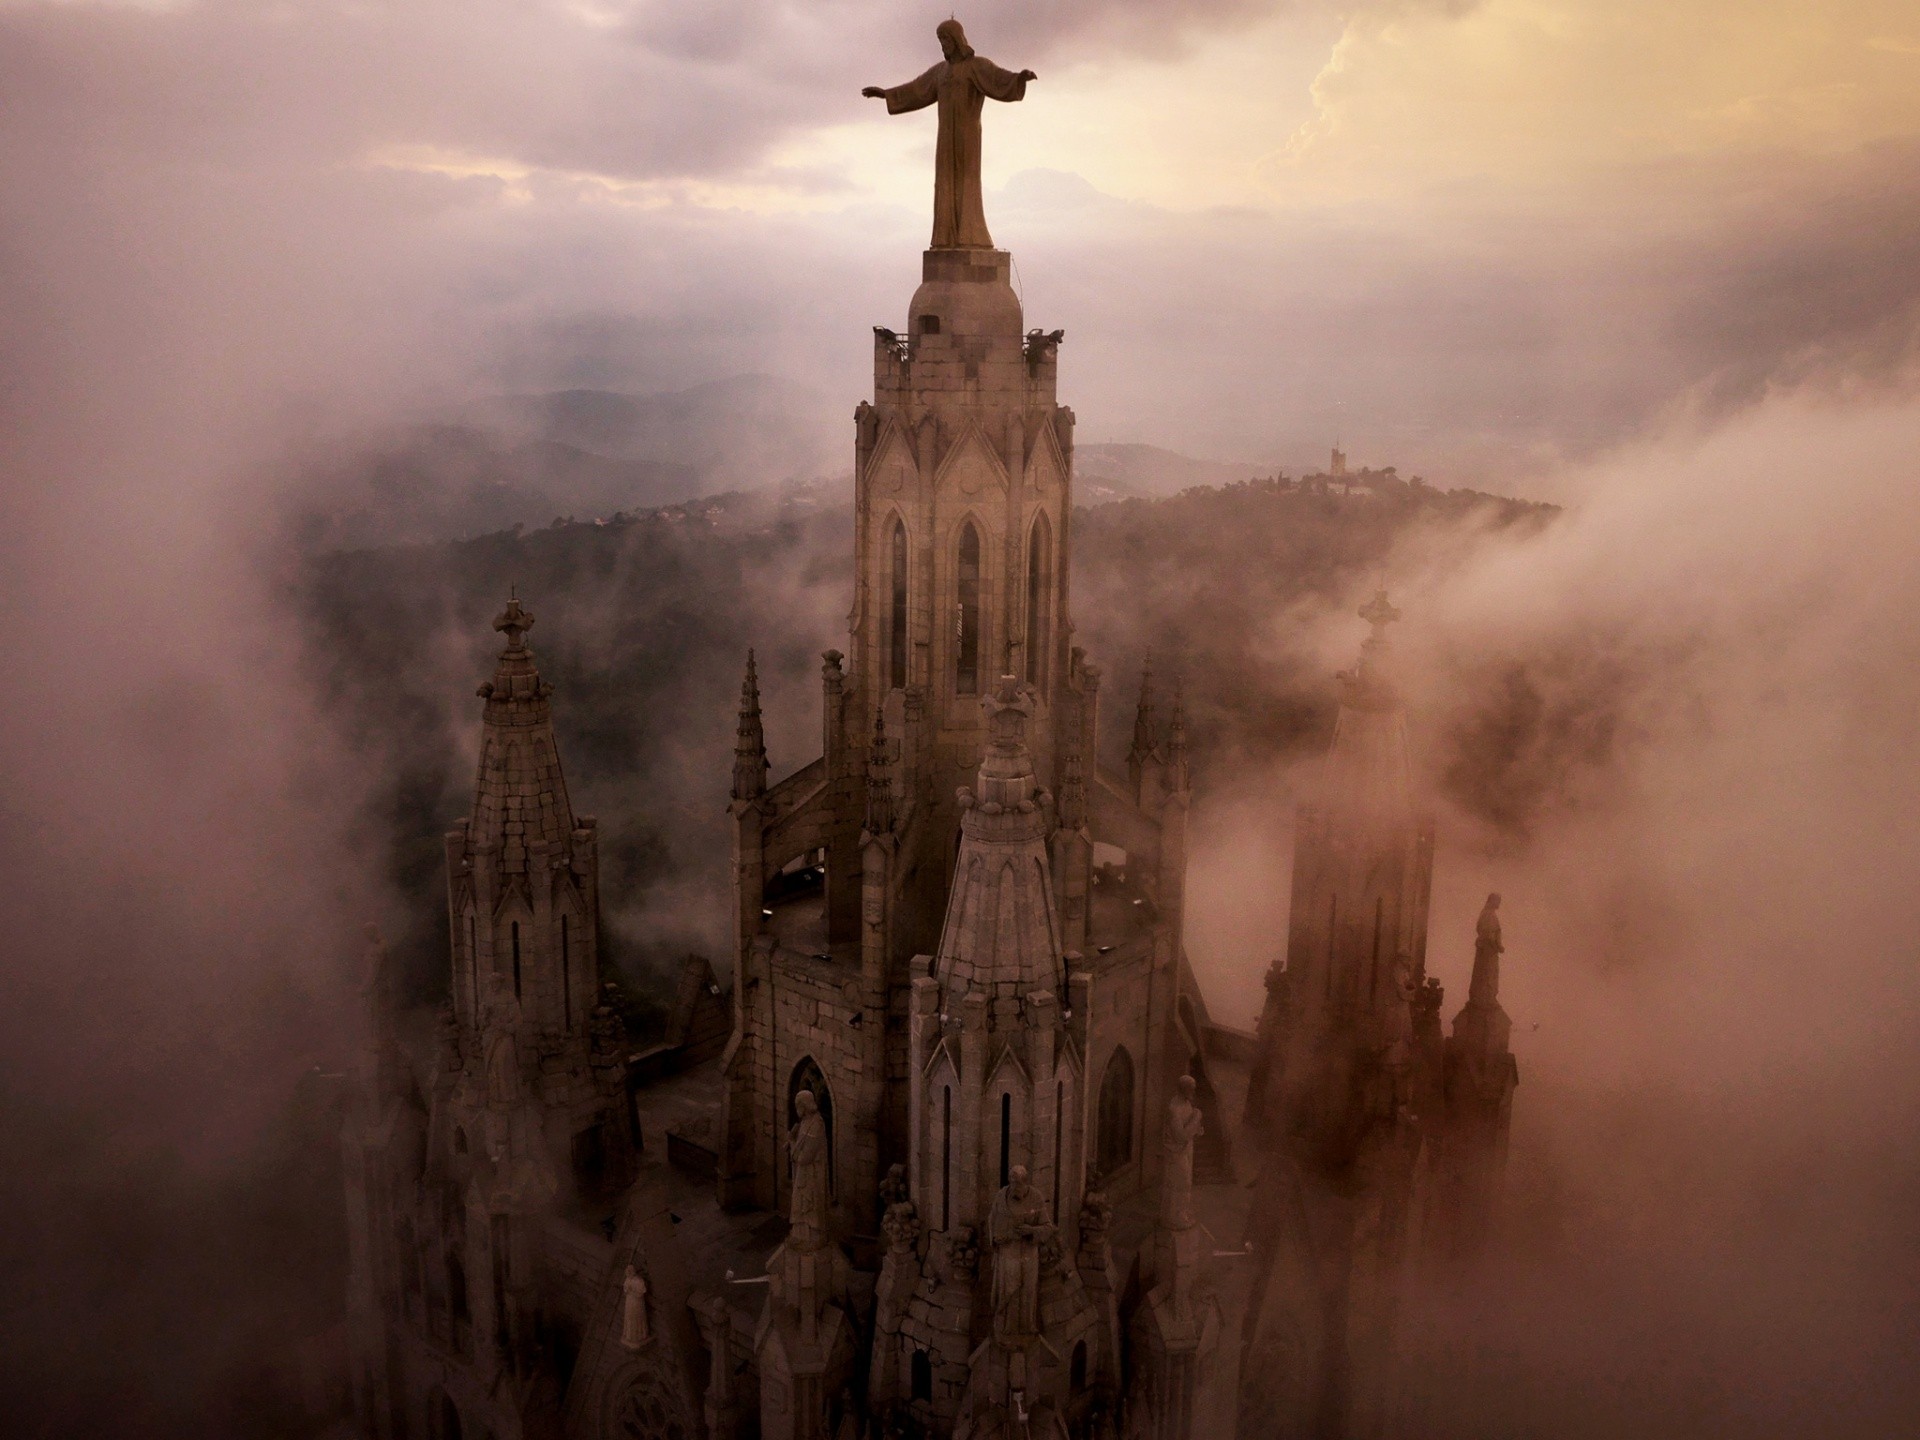 Architecture City Building Statue Jesus Christ Cathedral Clouds Mist Hills Church Barcelona Spain Bi 1920x1440